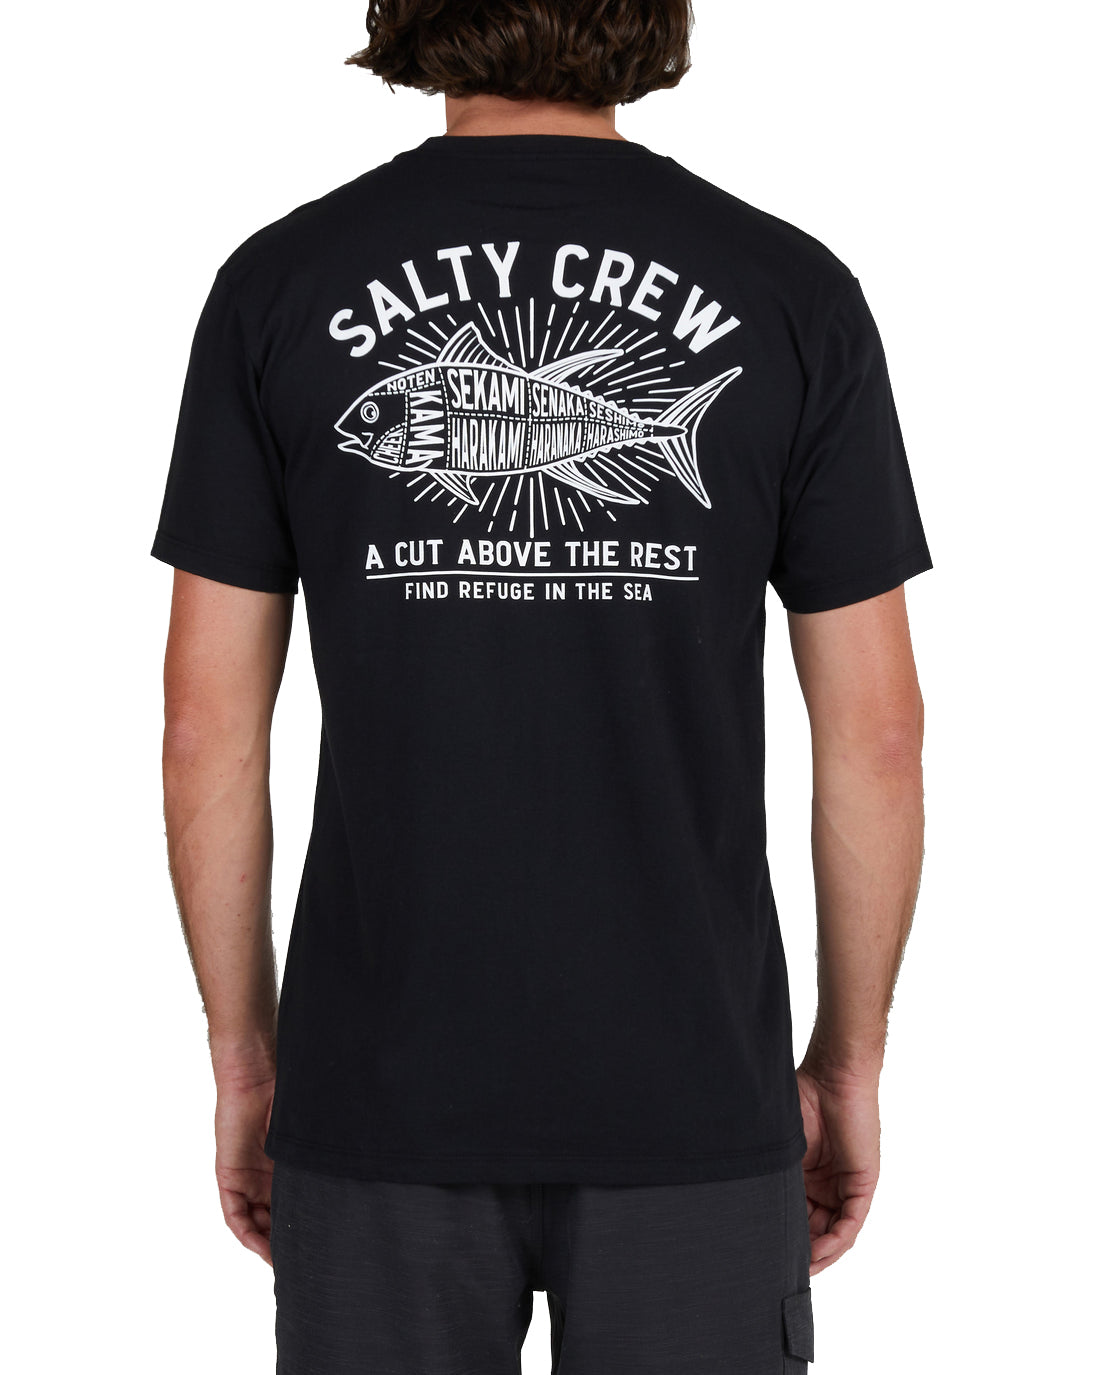 Salty Crew Cut Above SS Tee Black XXL